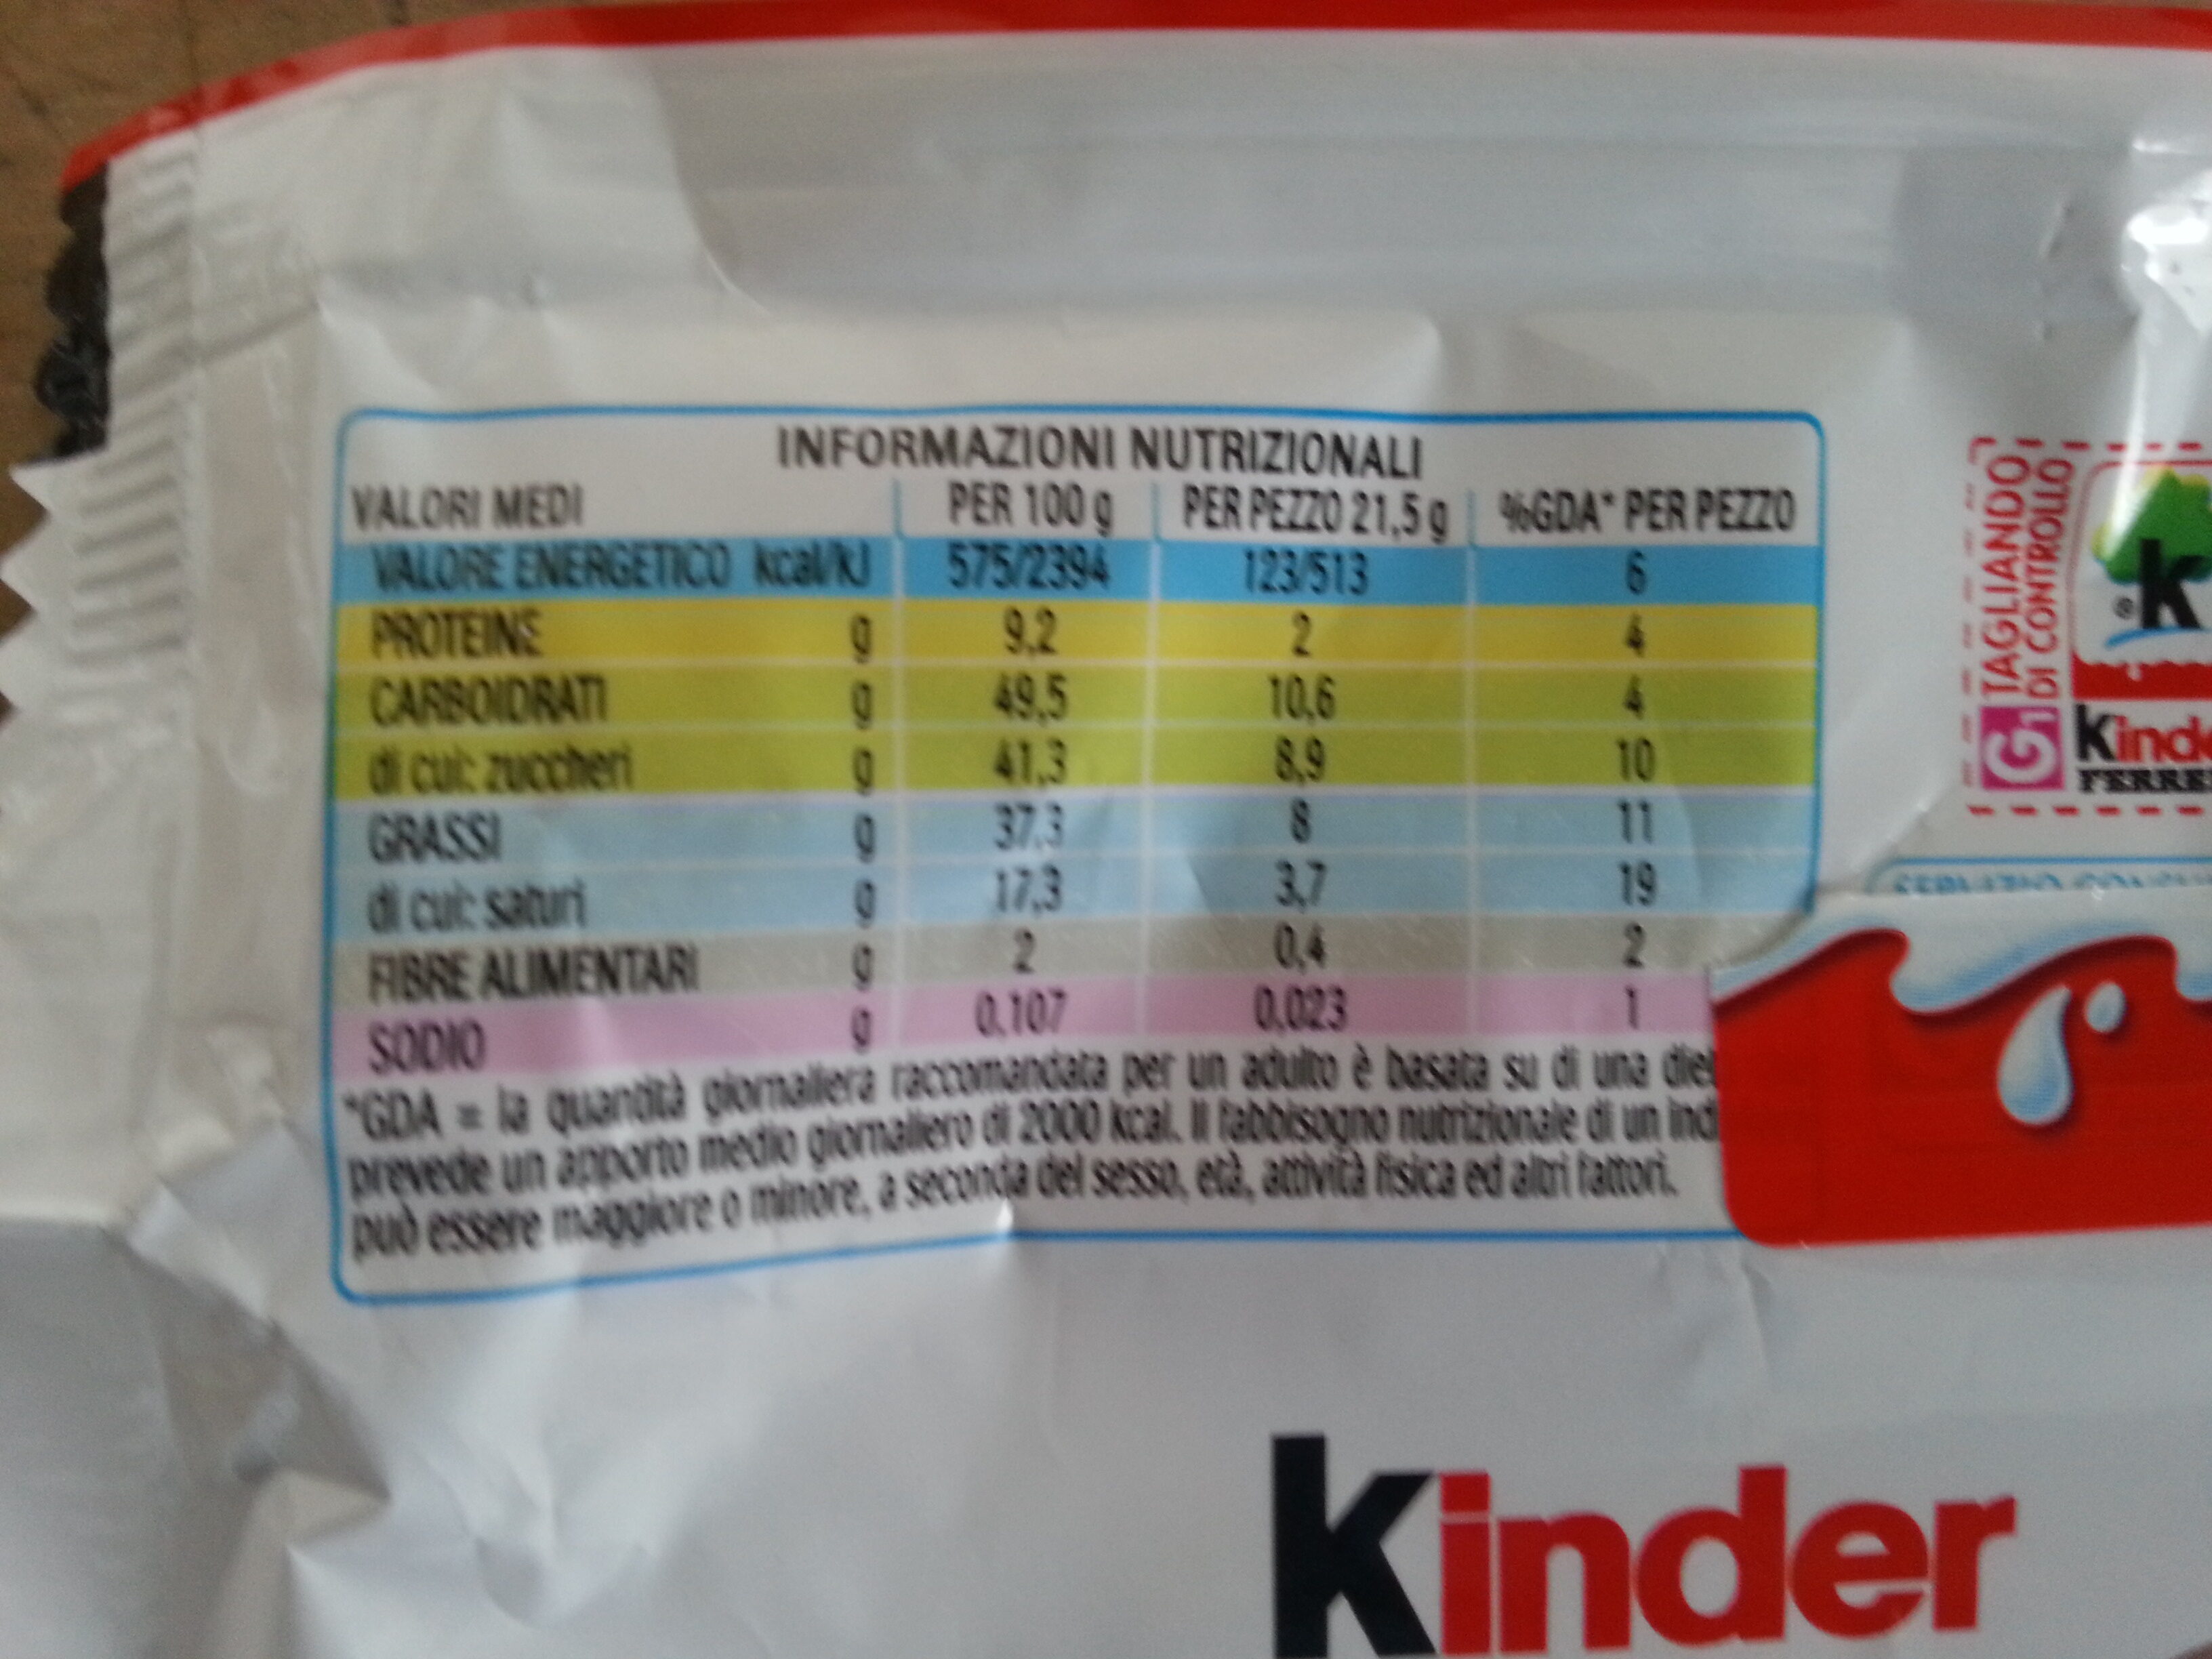 Kinder Bueno 1,10 Euro - Tableau nutritionnel